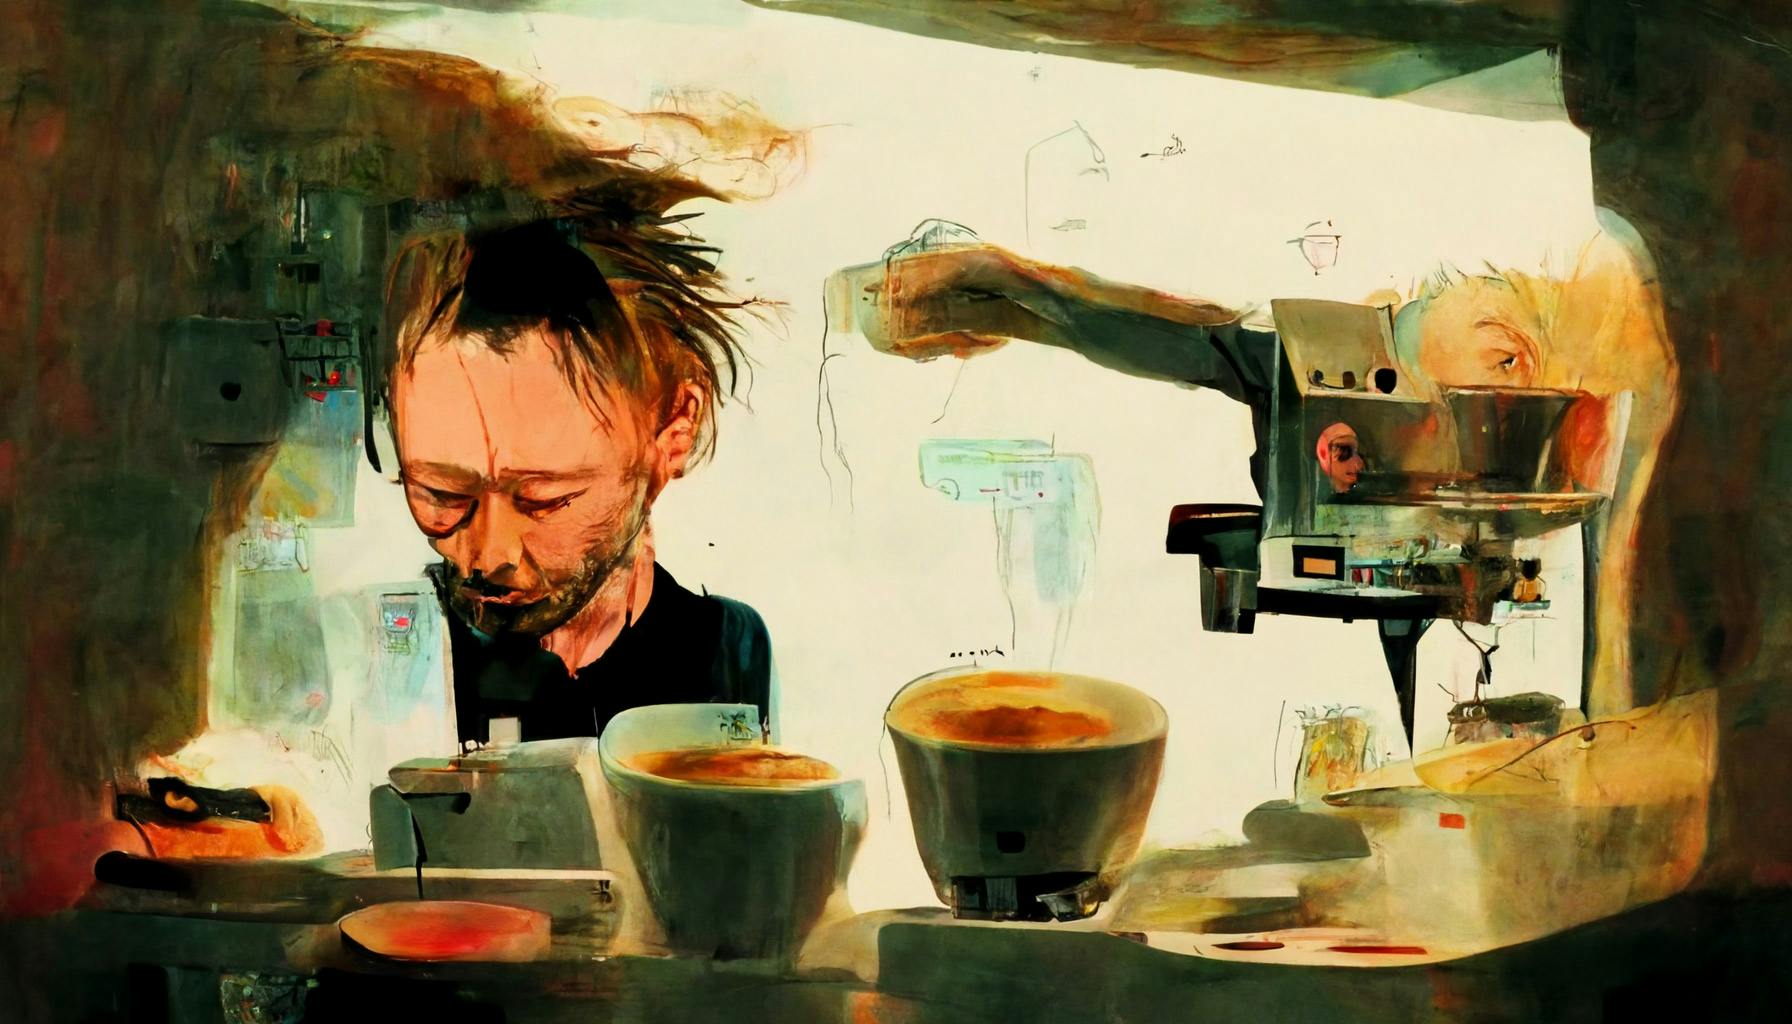 Radiohead's Thom York working as a barista